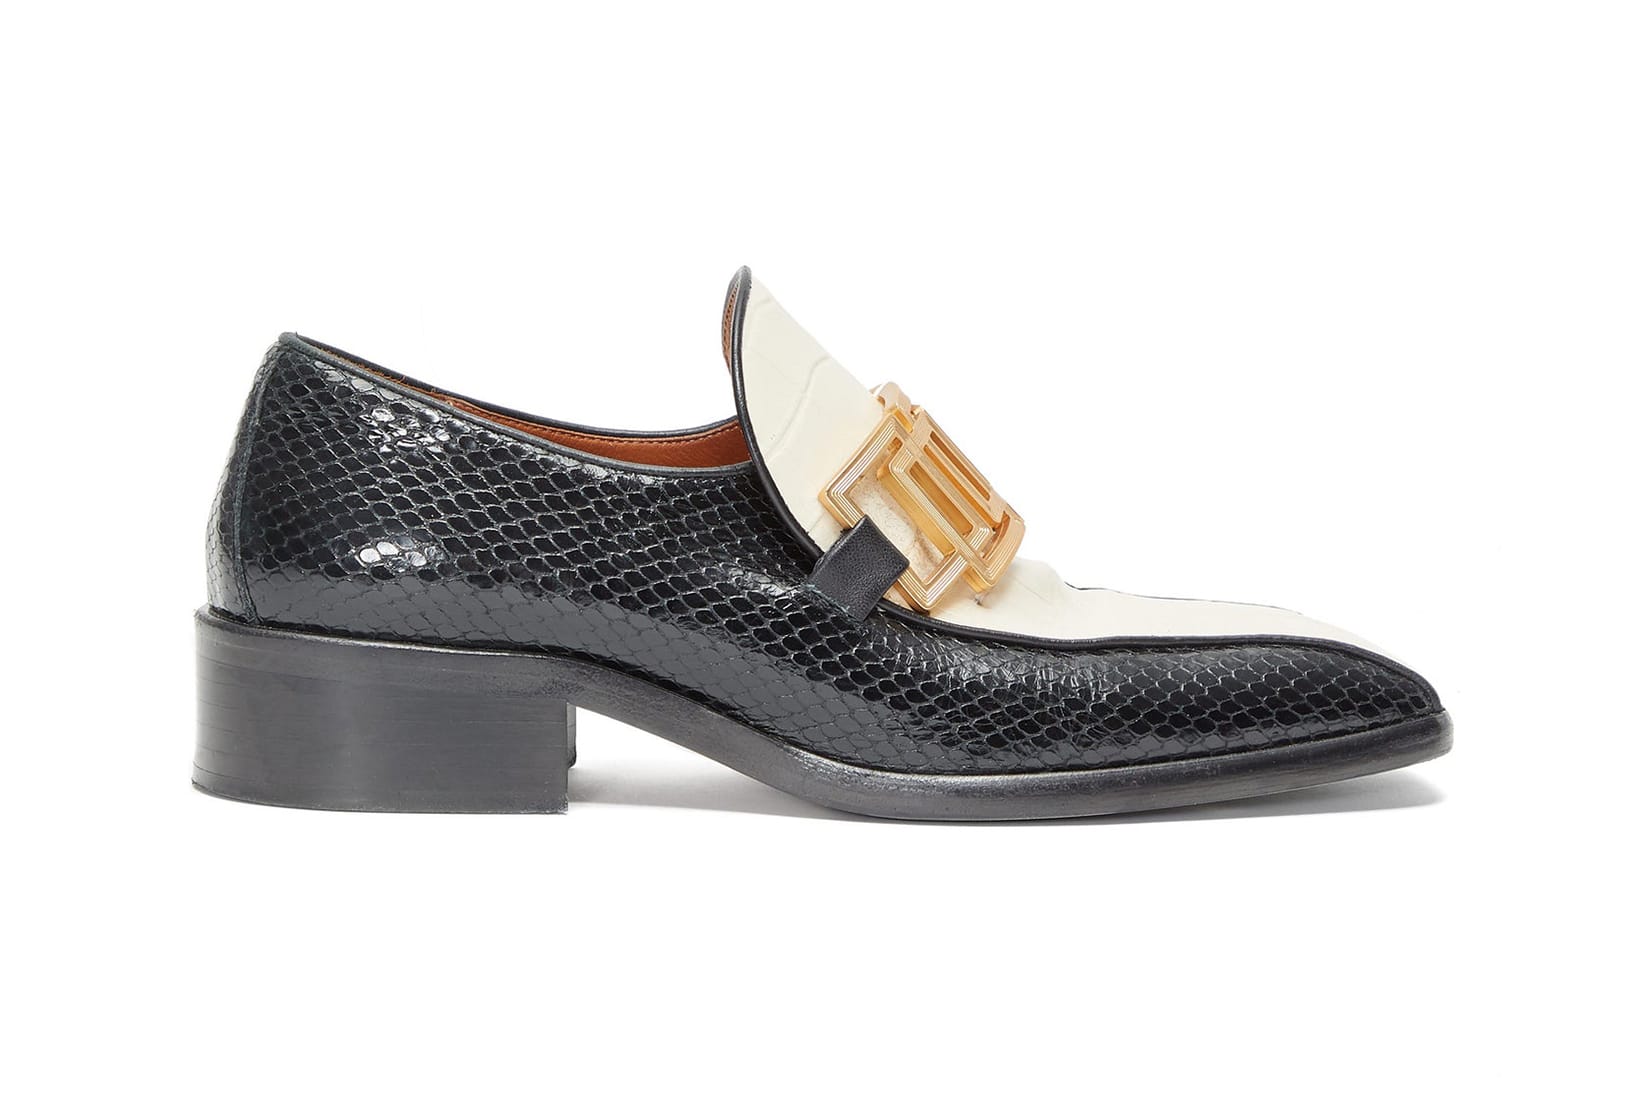 Designer Loafers for Women Fall 2020 